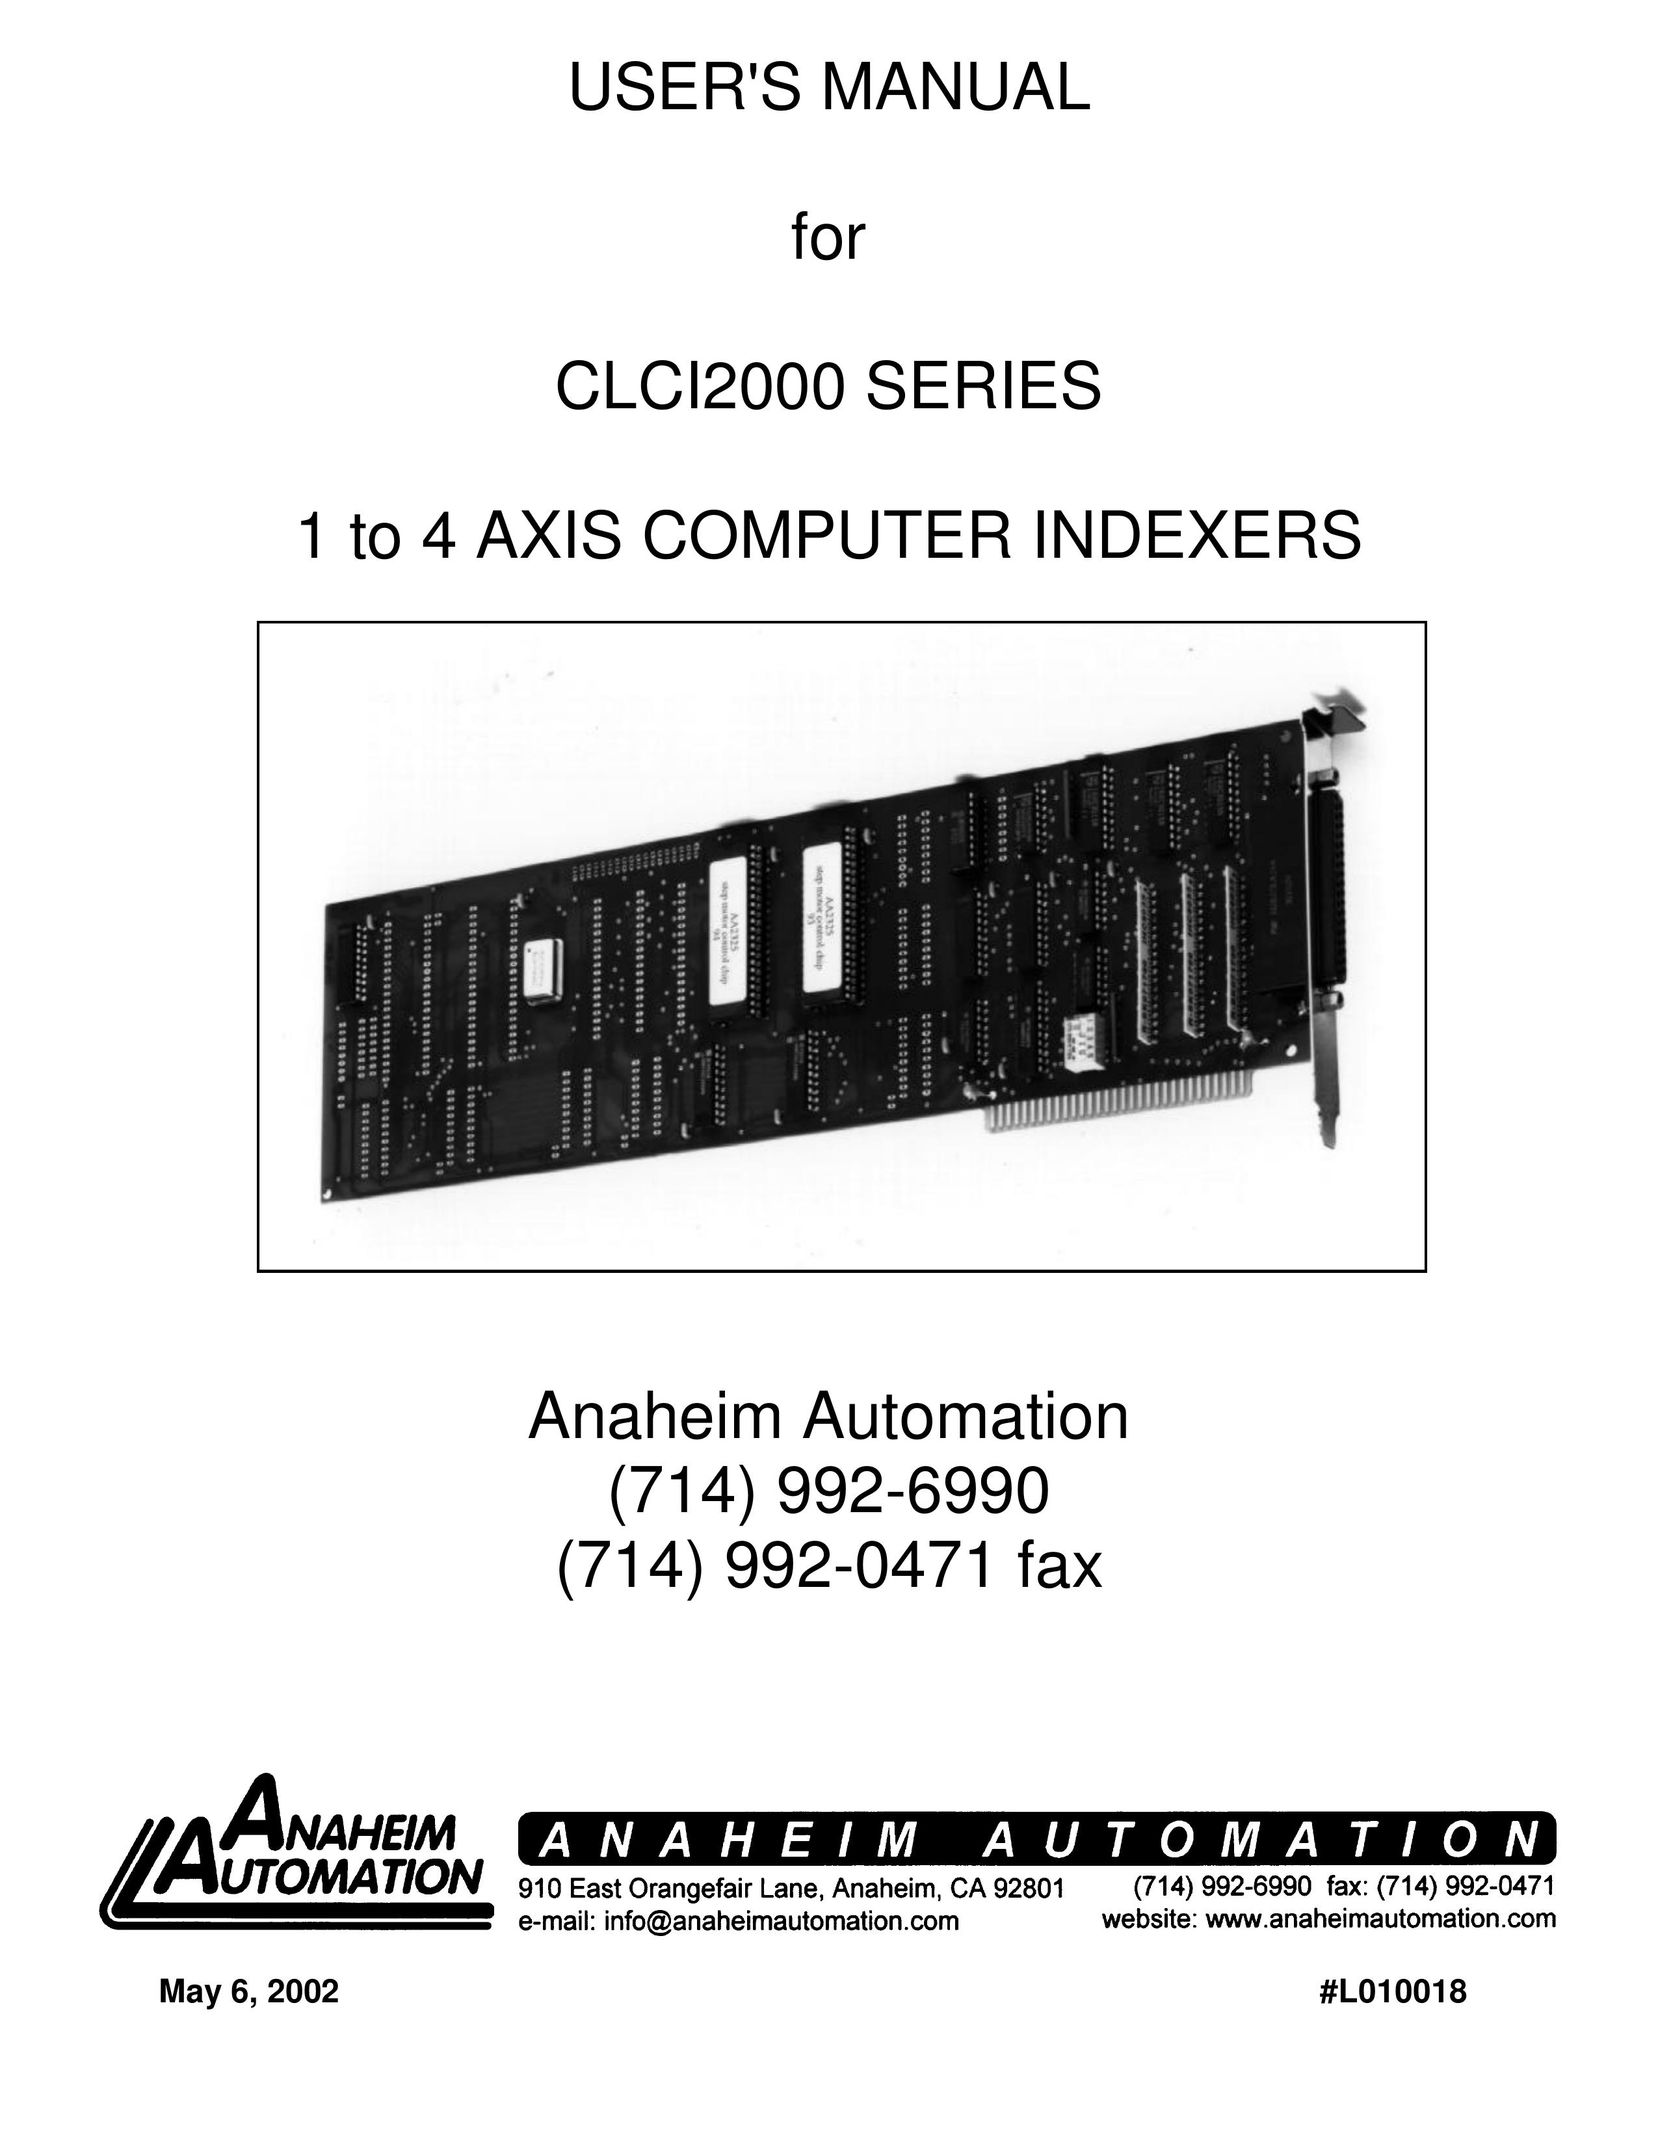 Anaheim CLCI2000 Computer Accessories User Manual